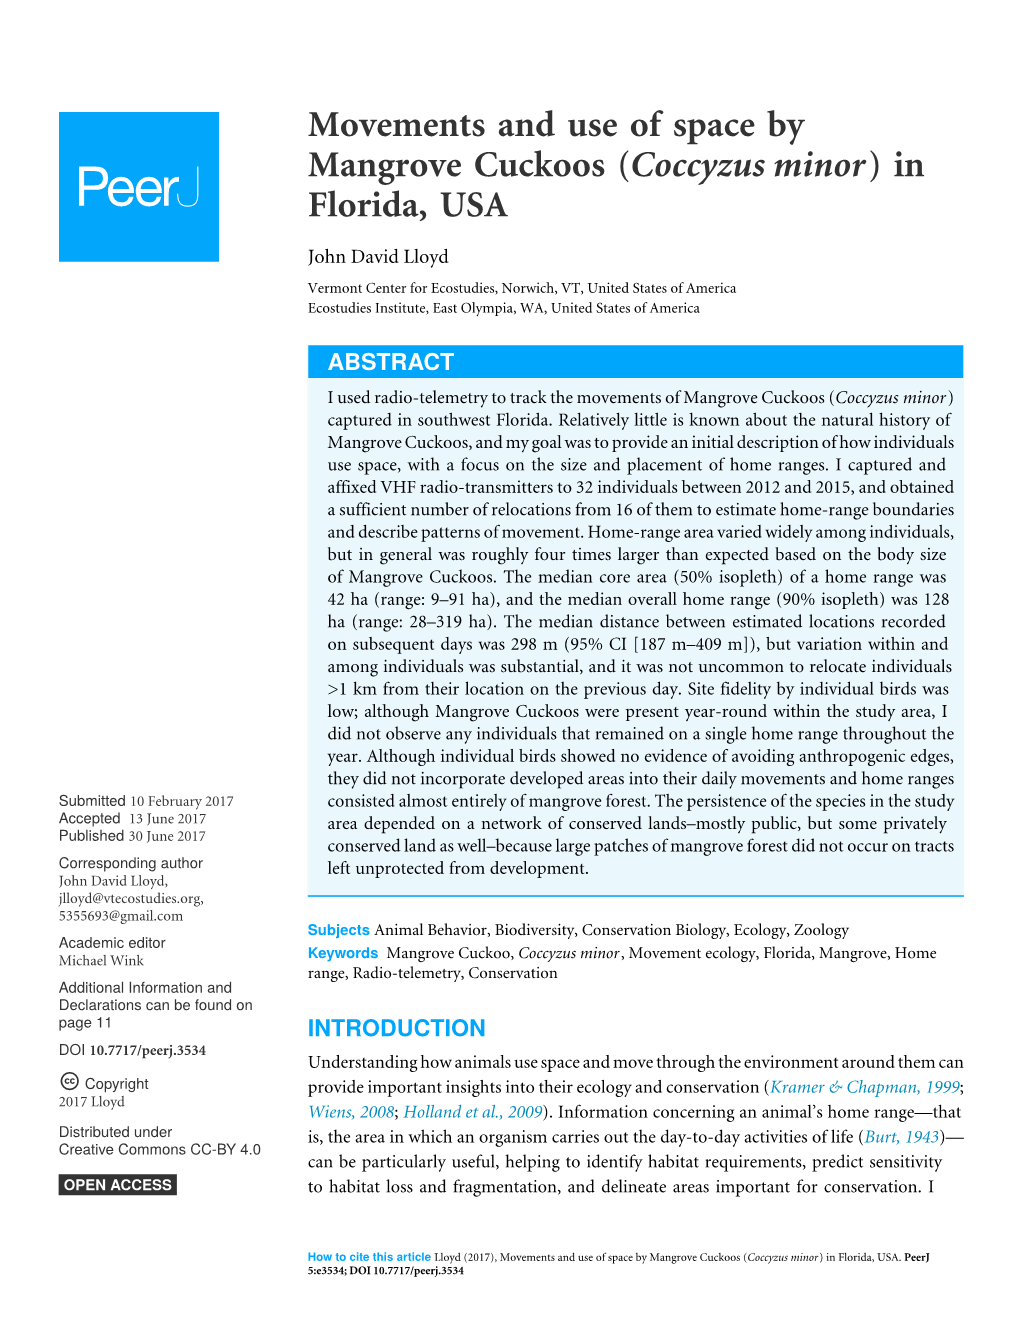 Coccyzus Minor) in Florida, USA